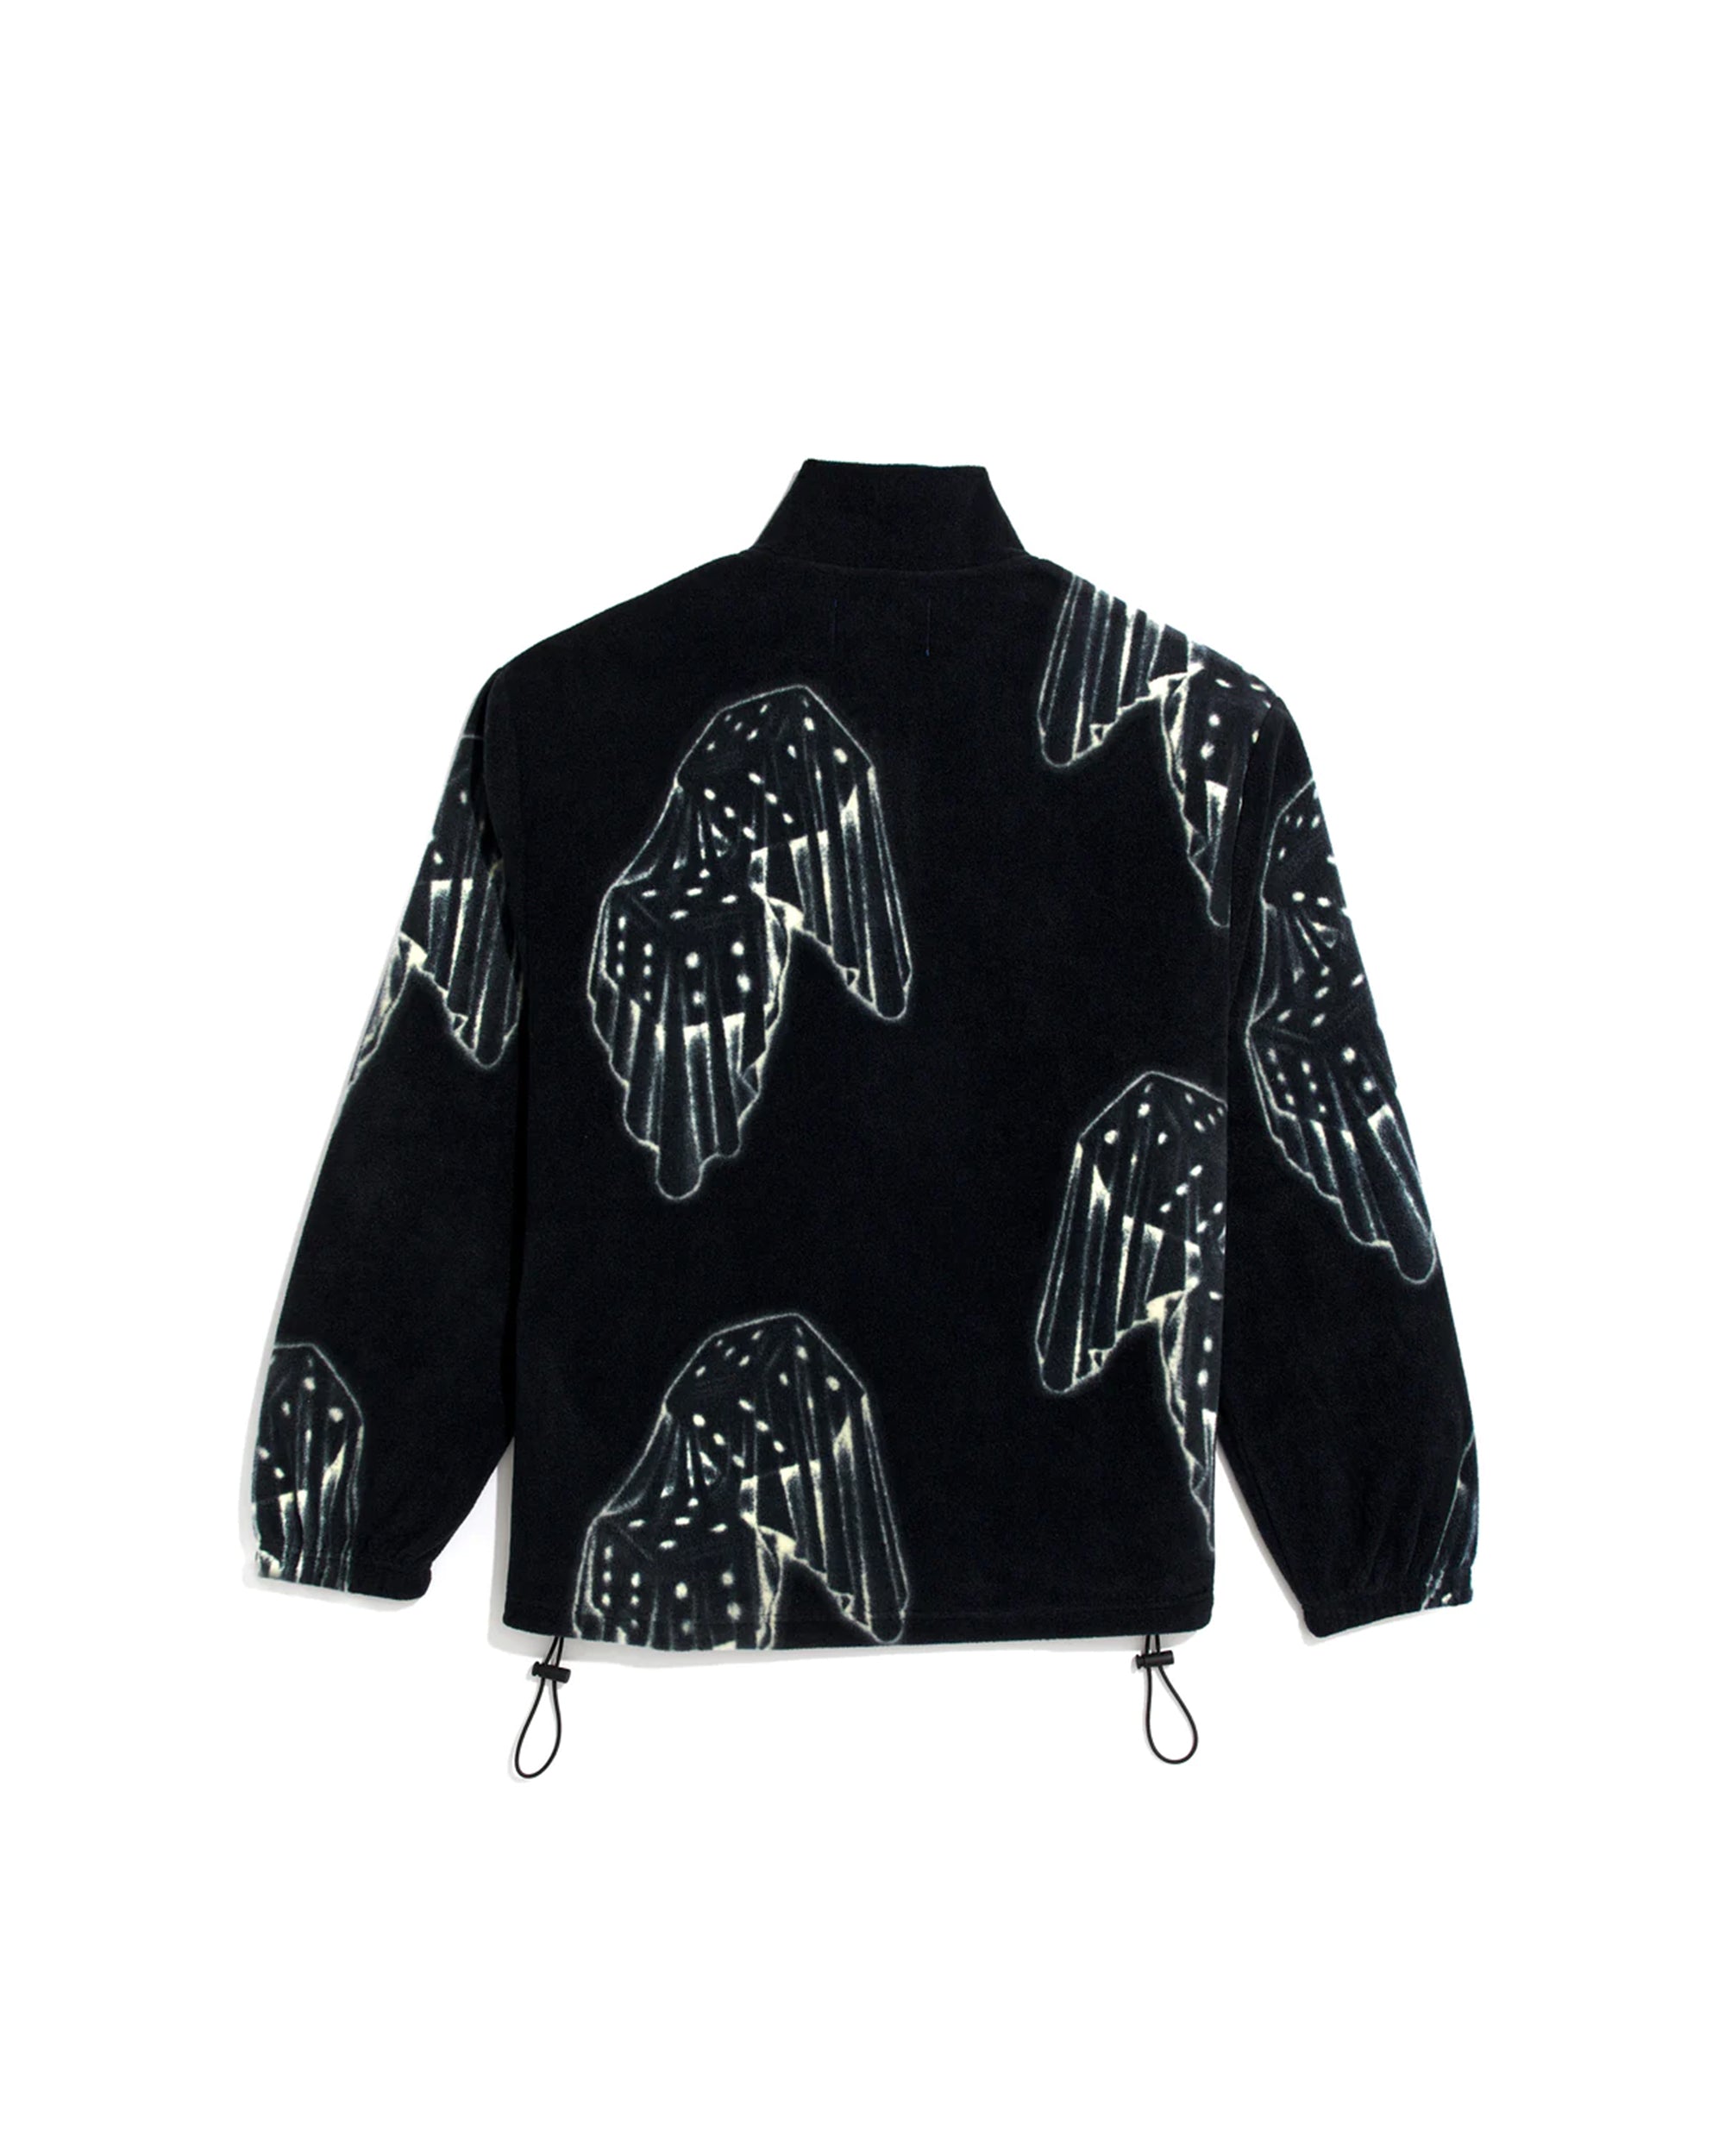 Dice Print Fleece Quarter Zip Pullover - Black / Cream